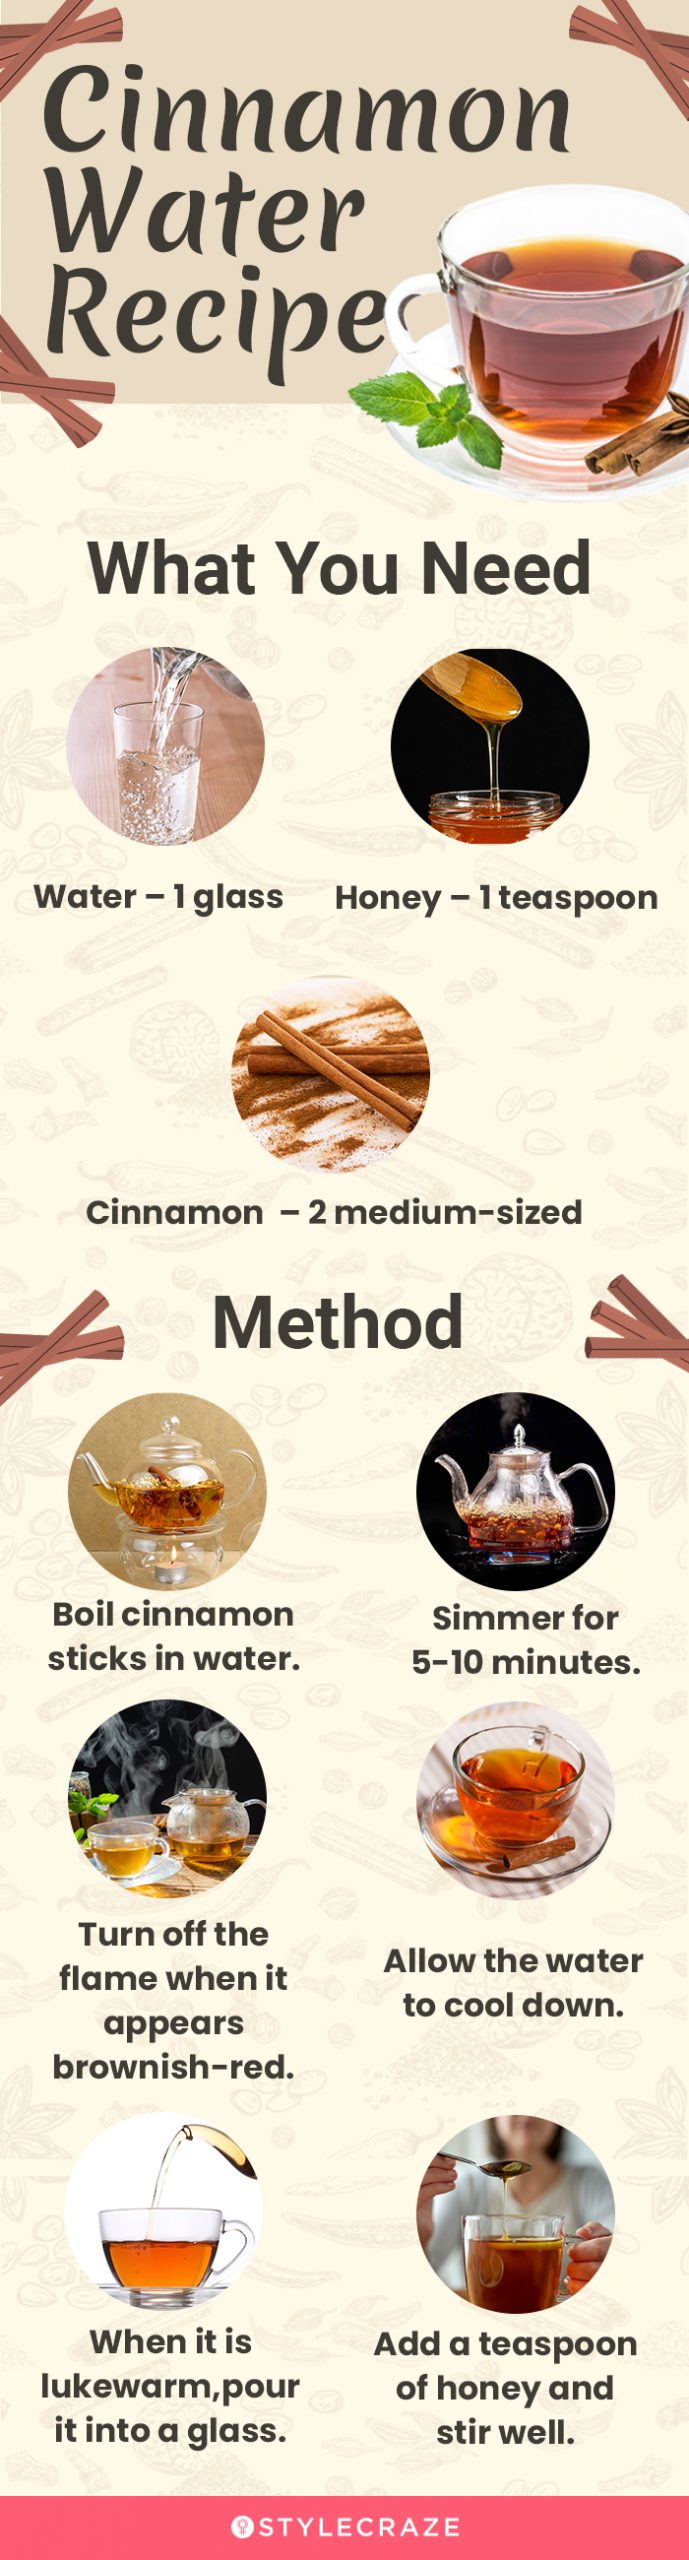 cinnamon water recipe (infographic)